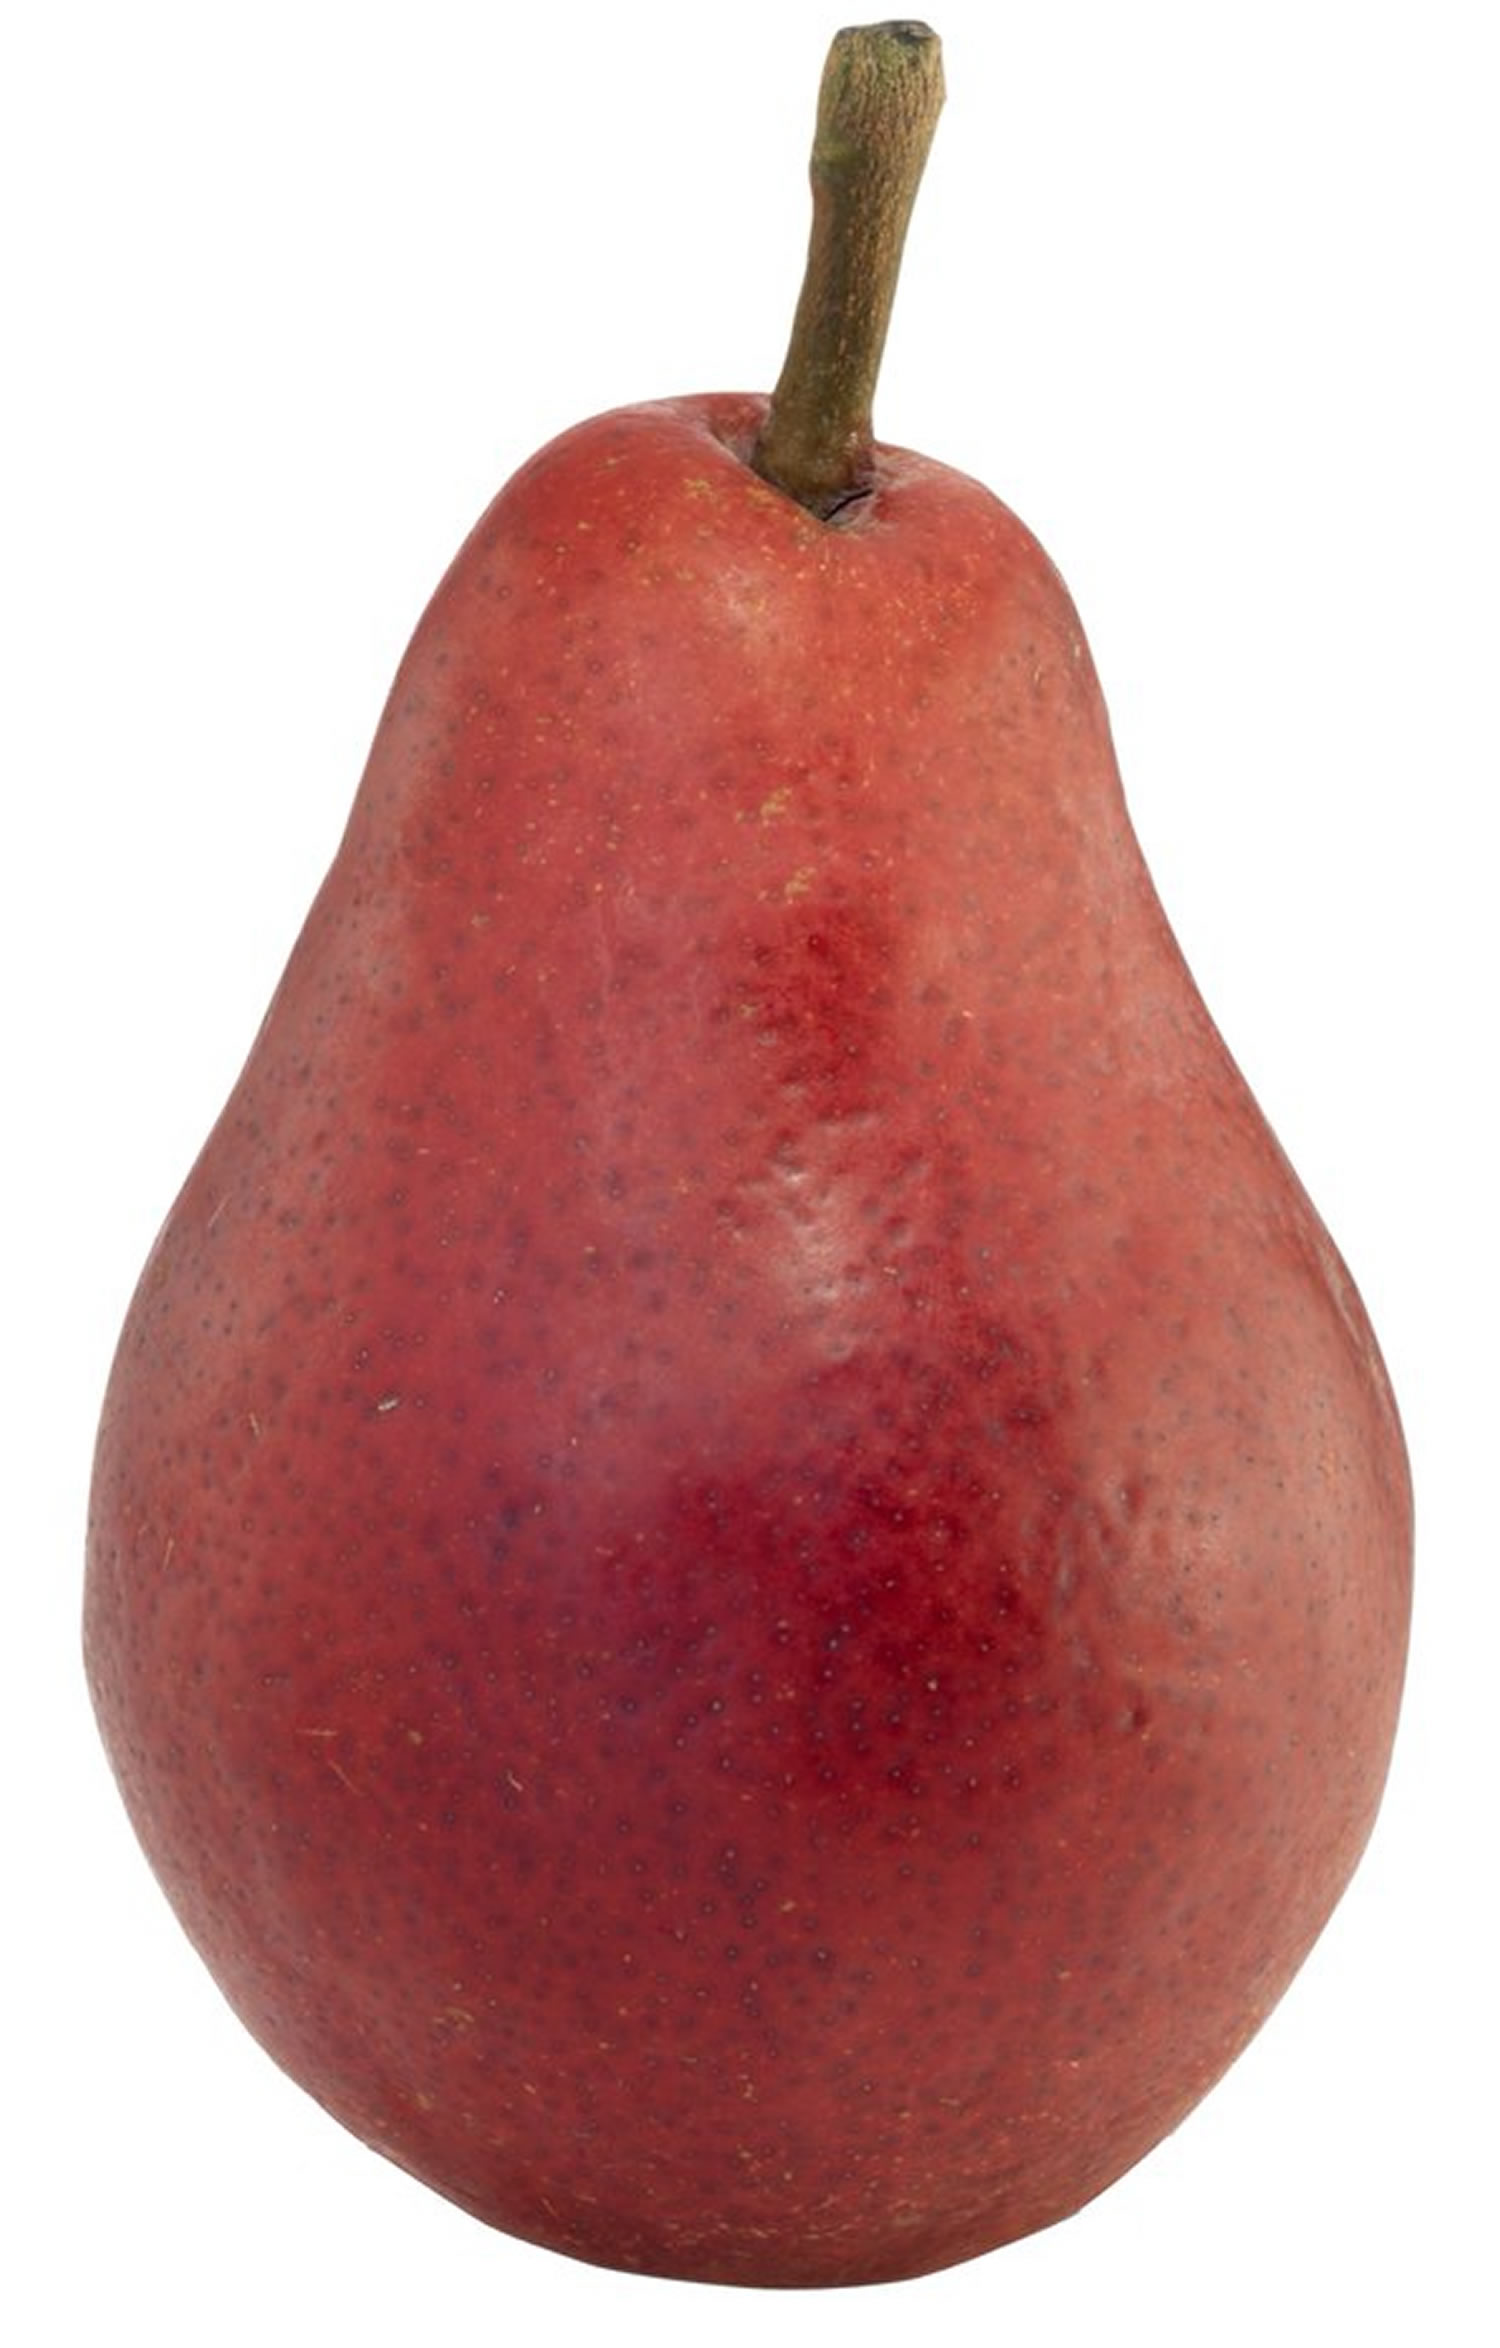 Starkrimson pear